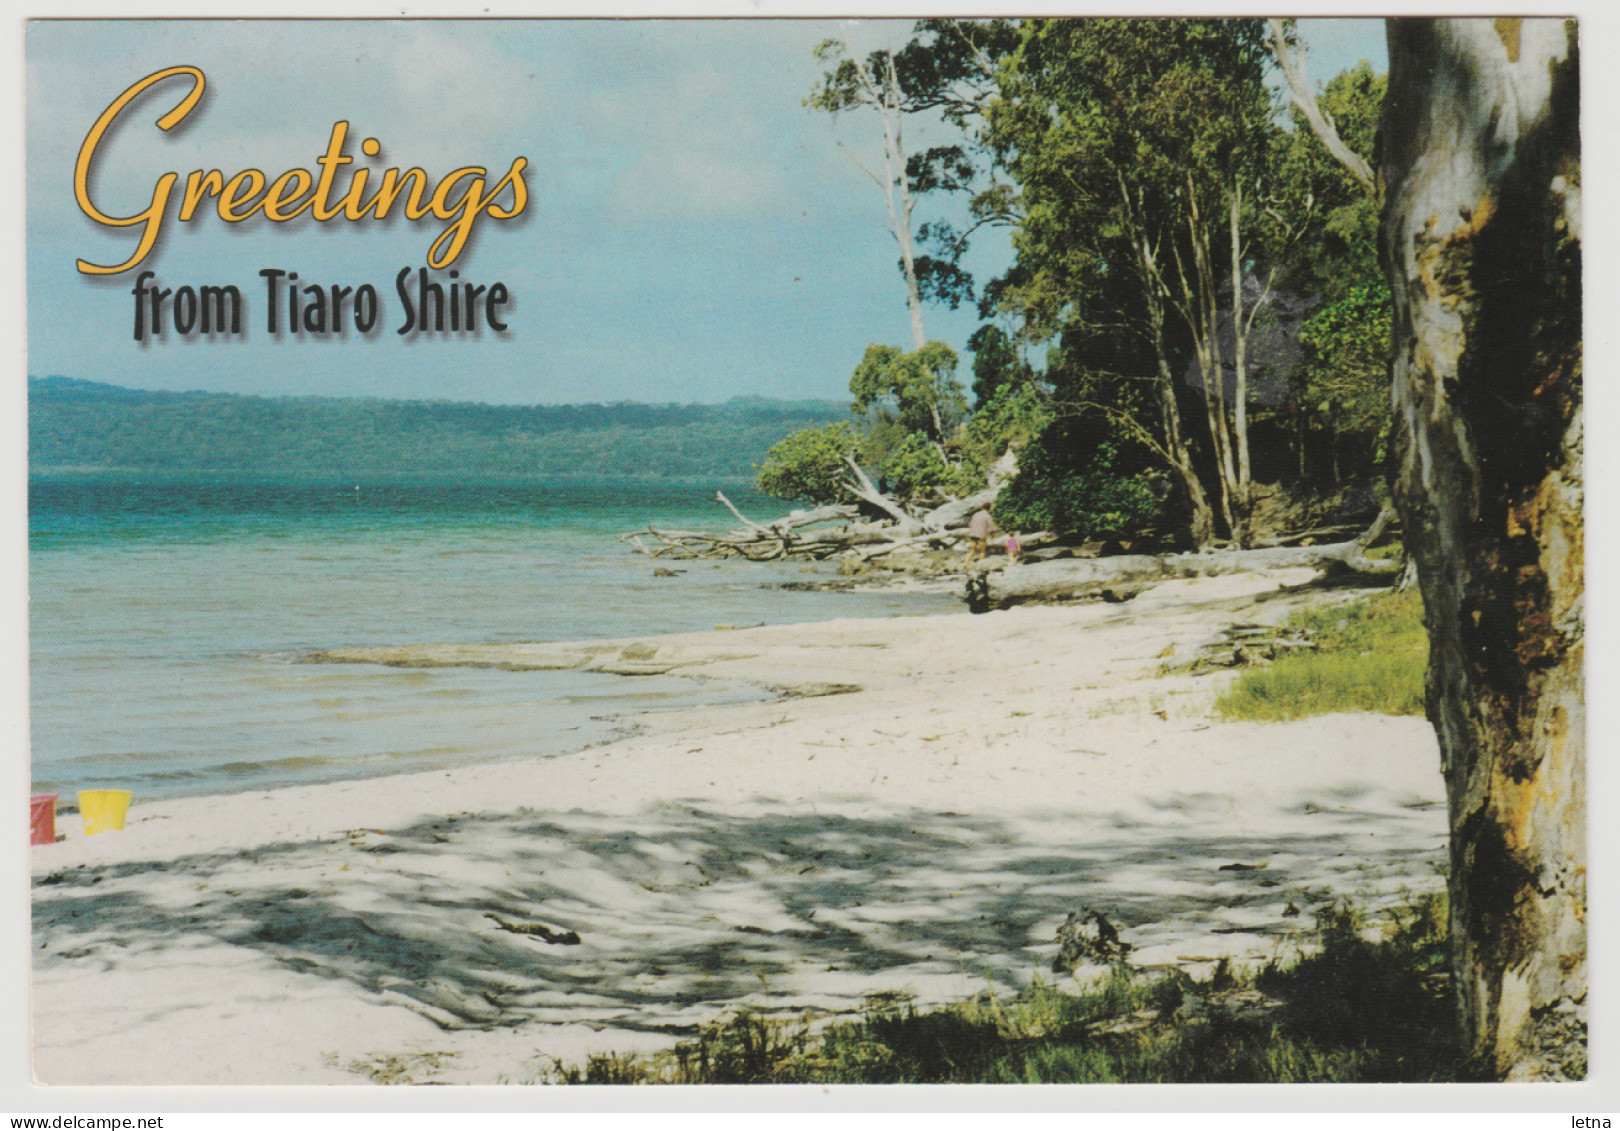 Australia QUEENSLAND QLD Tinnanbar Beach TIARO SHIRE Promotion Postcard C1980s - Other & Unclassified